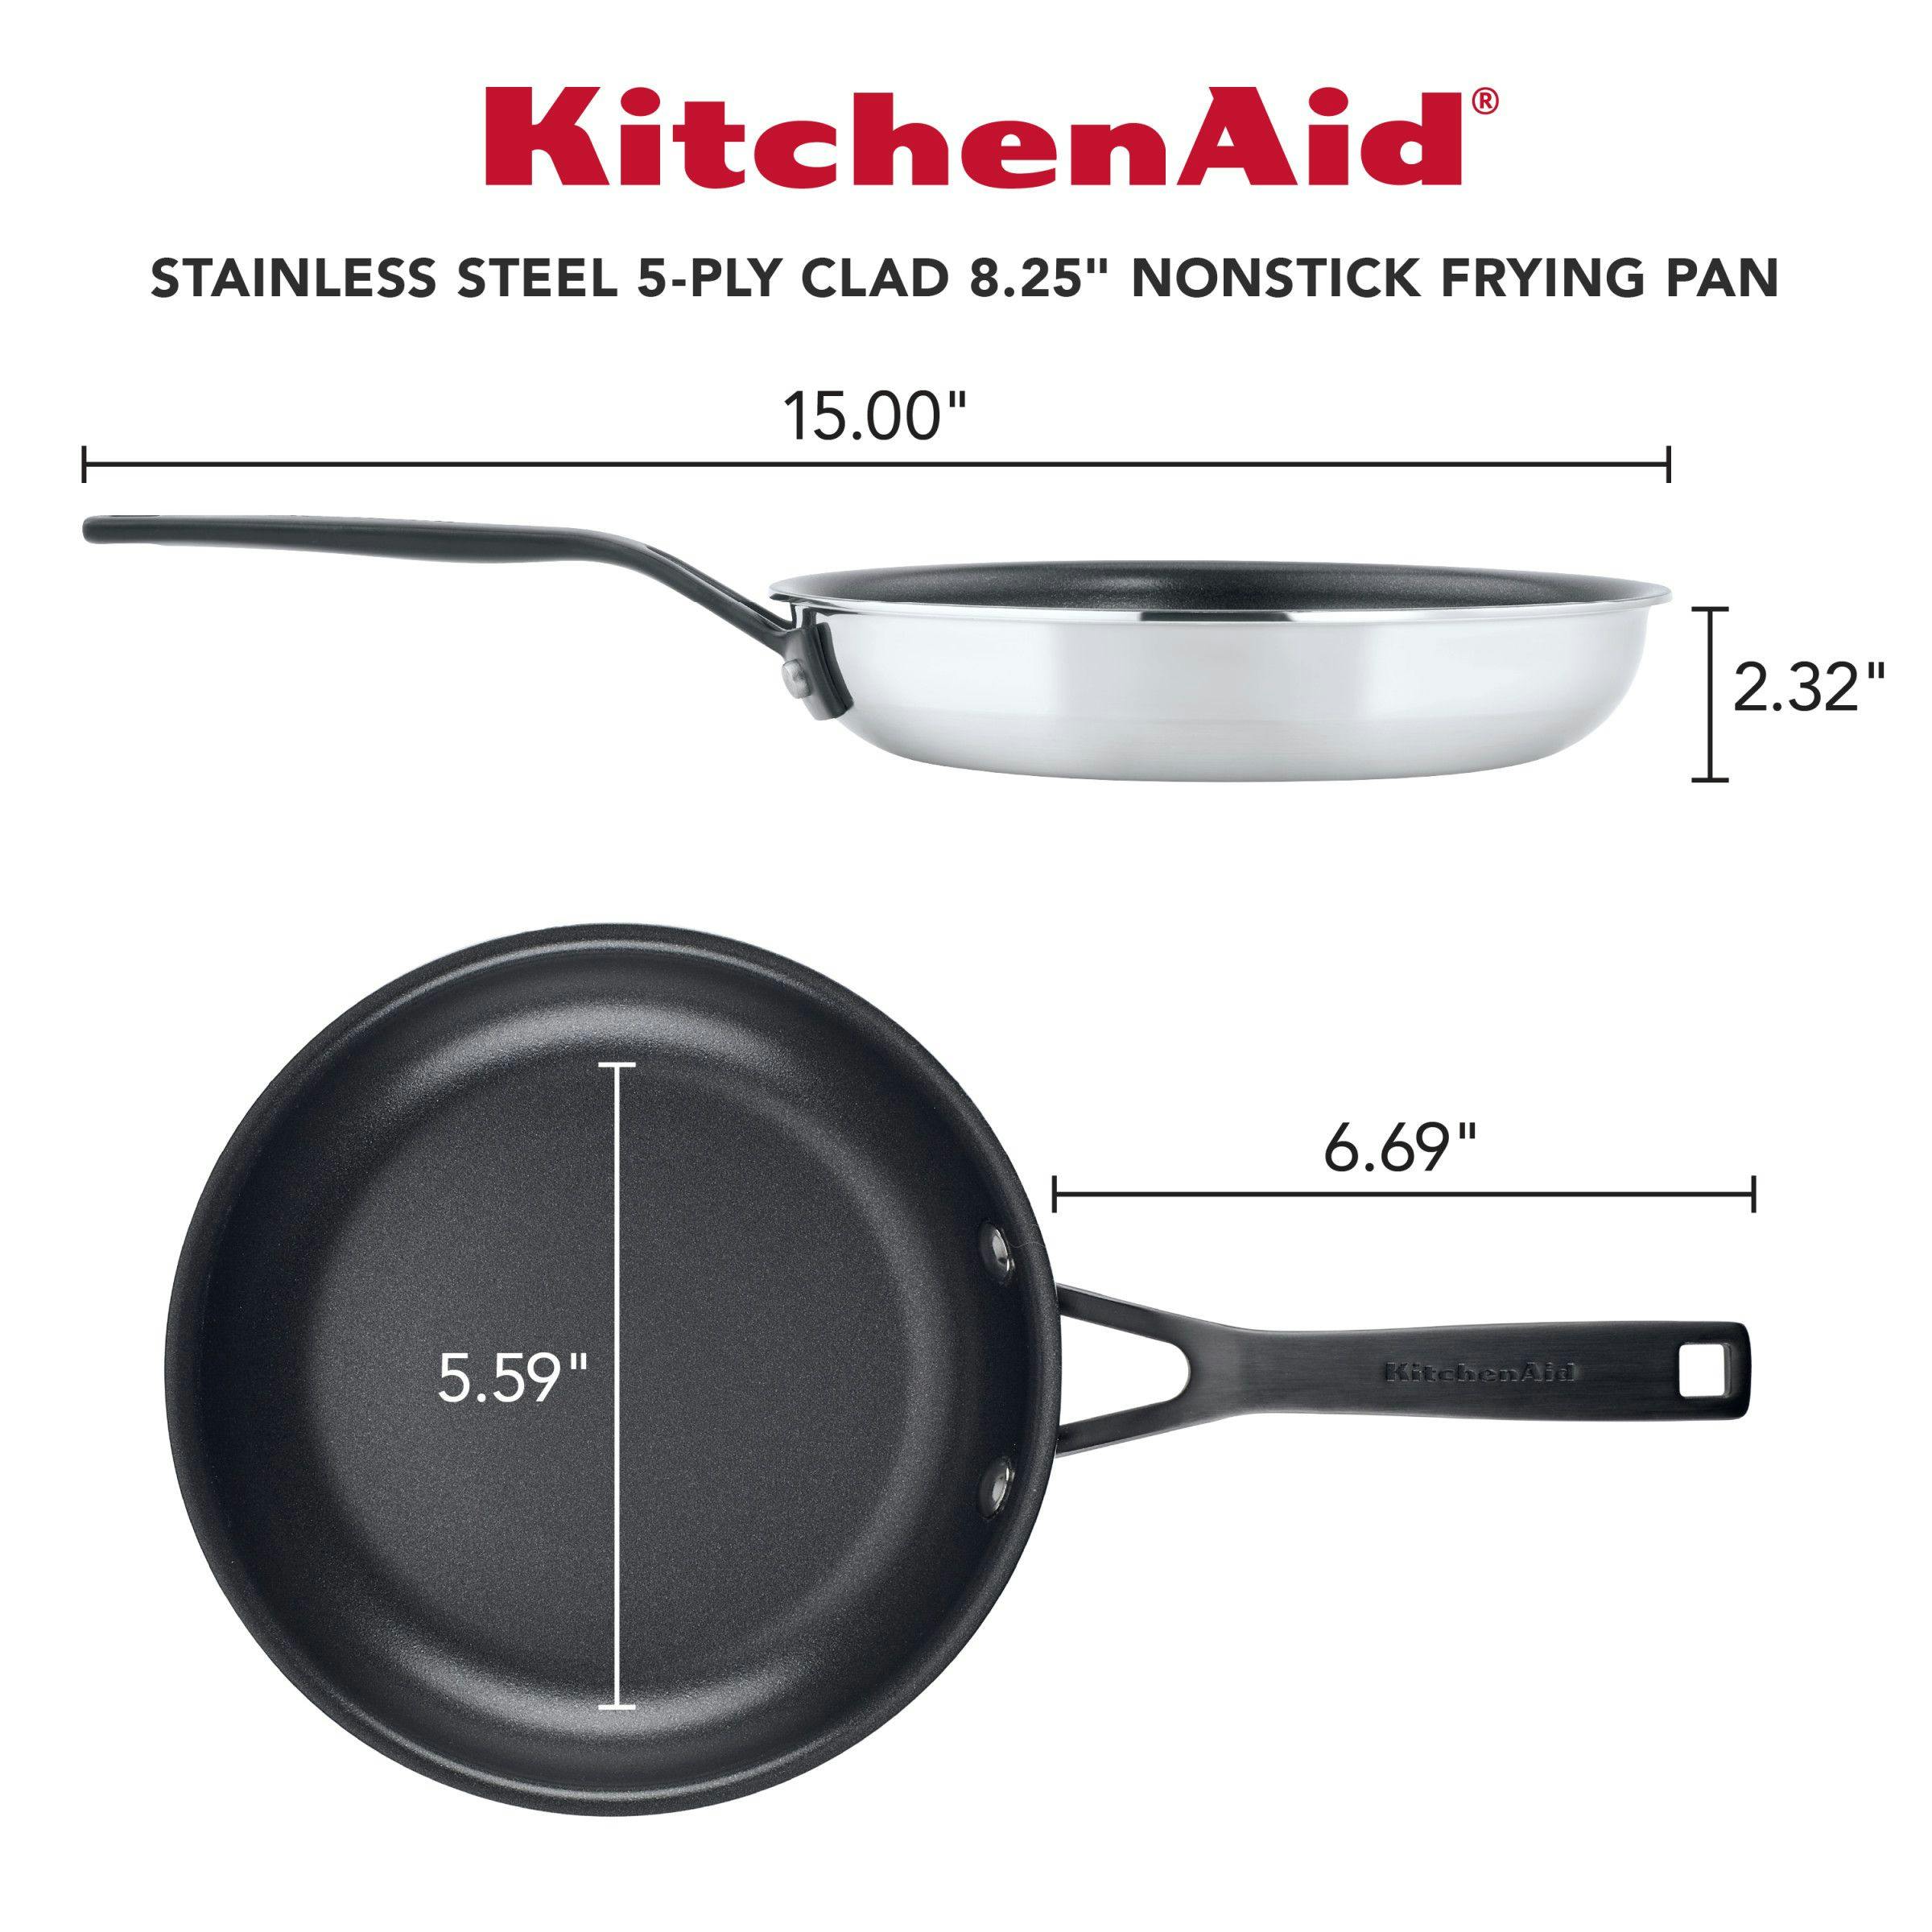 KitchenAid Hard Anodized Induction Nonstick Fry Pan/Skillet, 8.25 Inch,  Matte Black